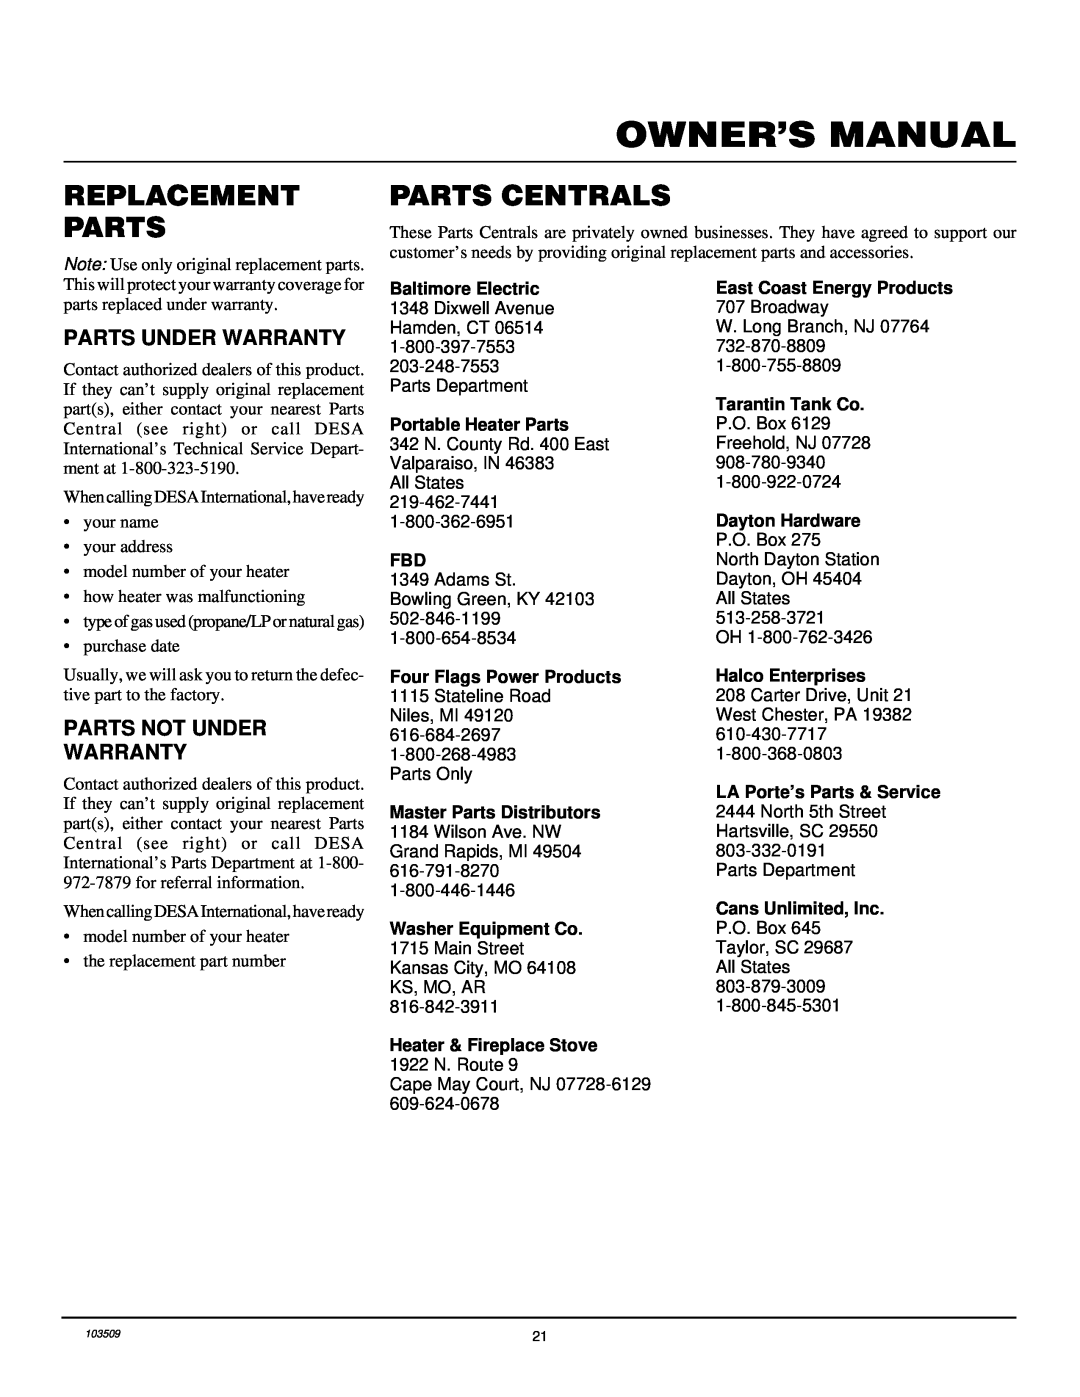 Desa Tech RFP28TC installation manual Replacement Parts, Parts Centrals, Parts Under Warranty, Parts Not Under Warranty 